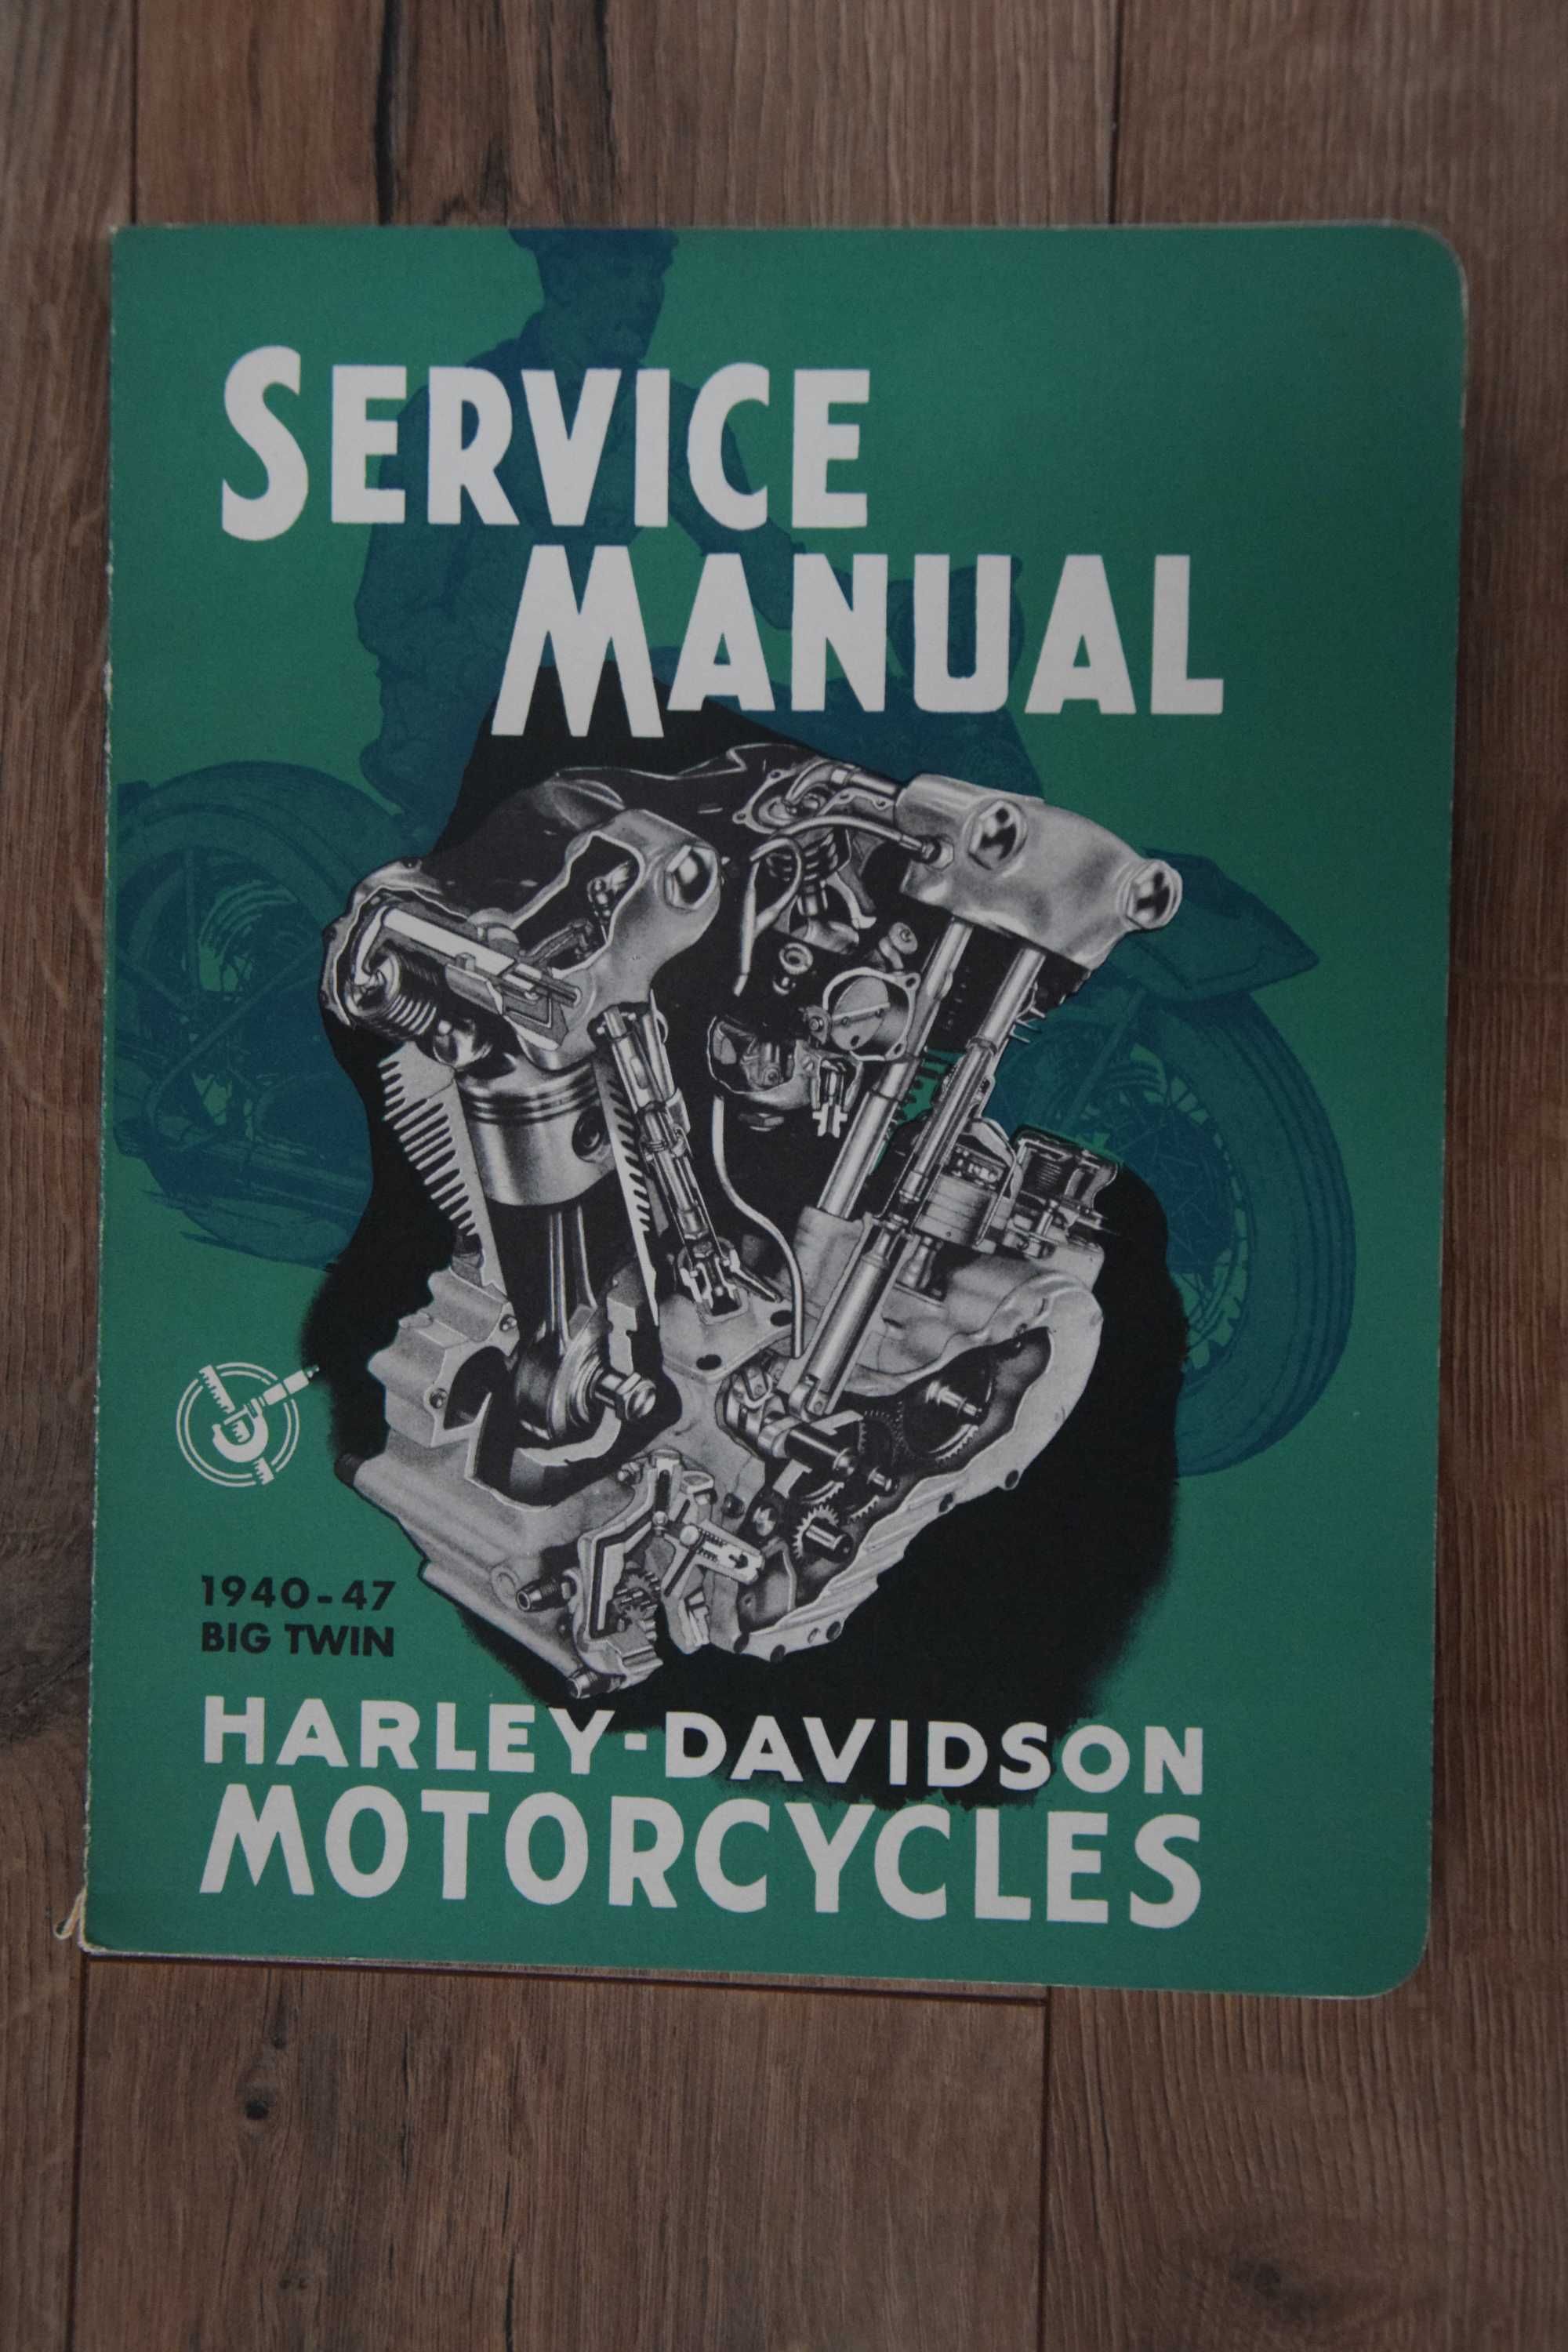 Instrukcja Katalog Harley Davidson 1940-47 Big Twin